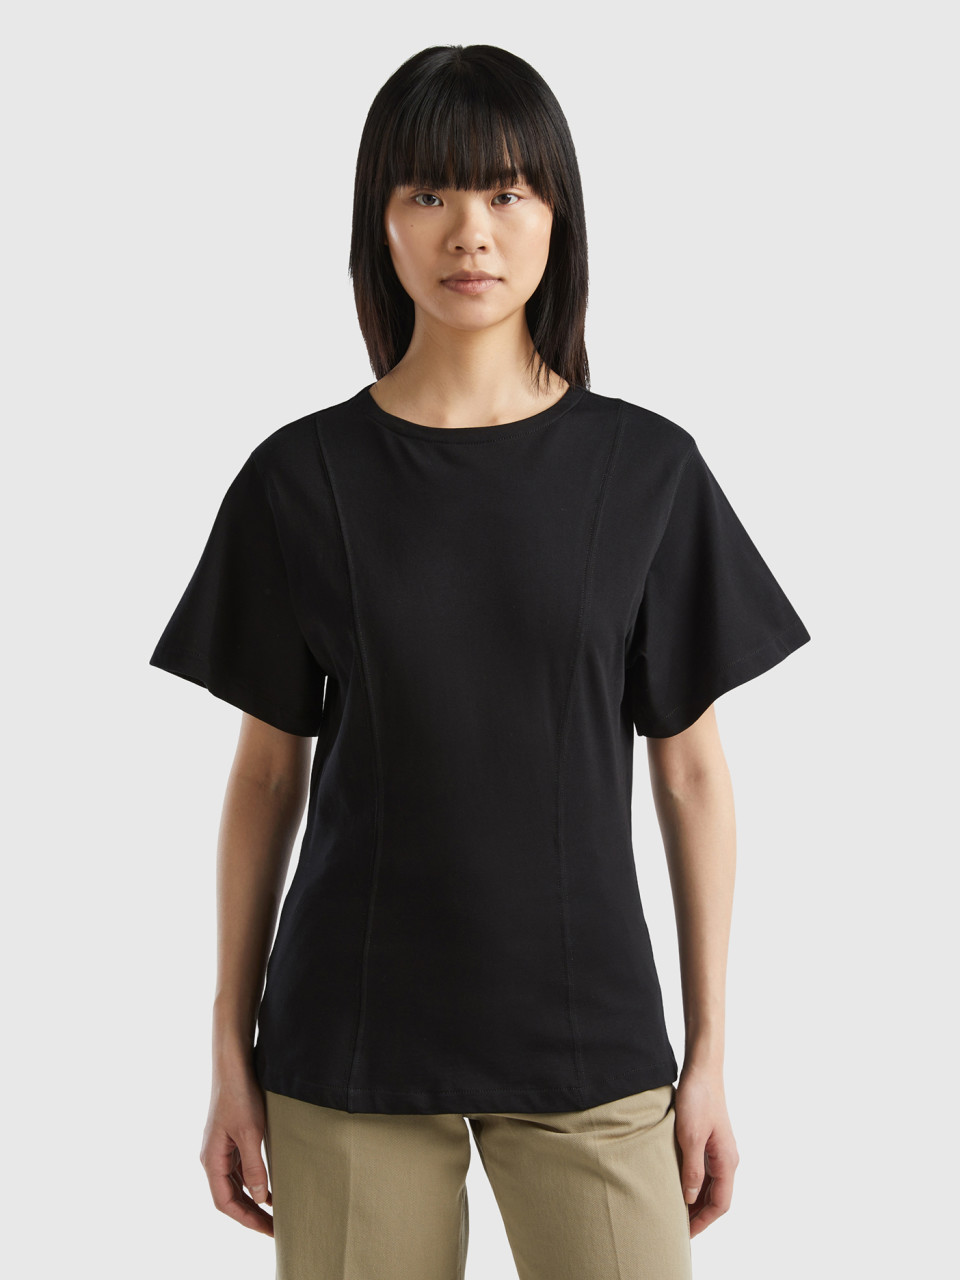 Benetton, Cálida Camiseta Entallada, Negro, Mujer